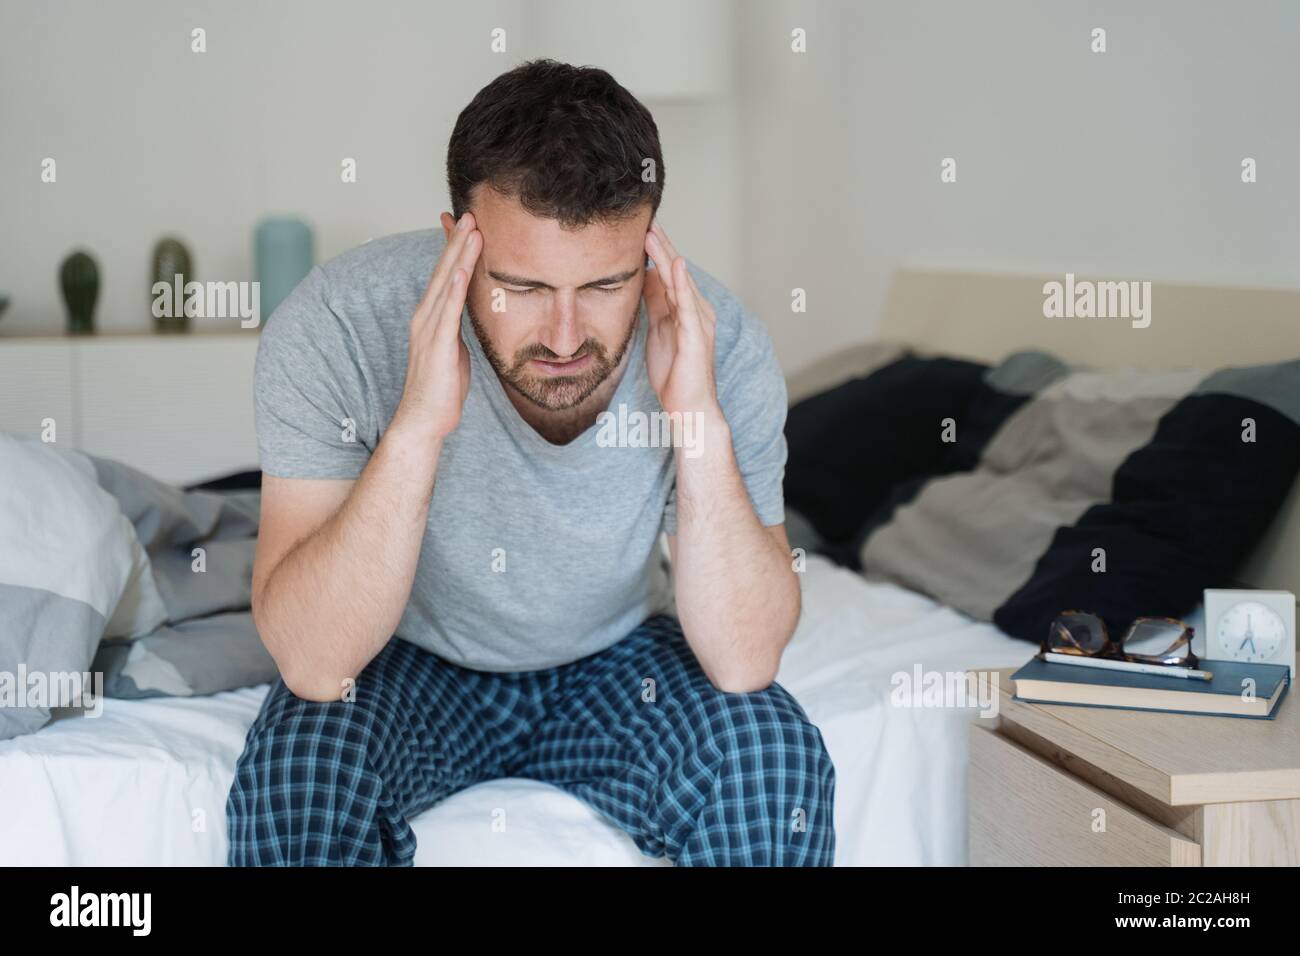 Man with sleeping problem wake up feeling tiredness Stock Photo